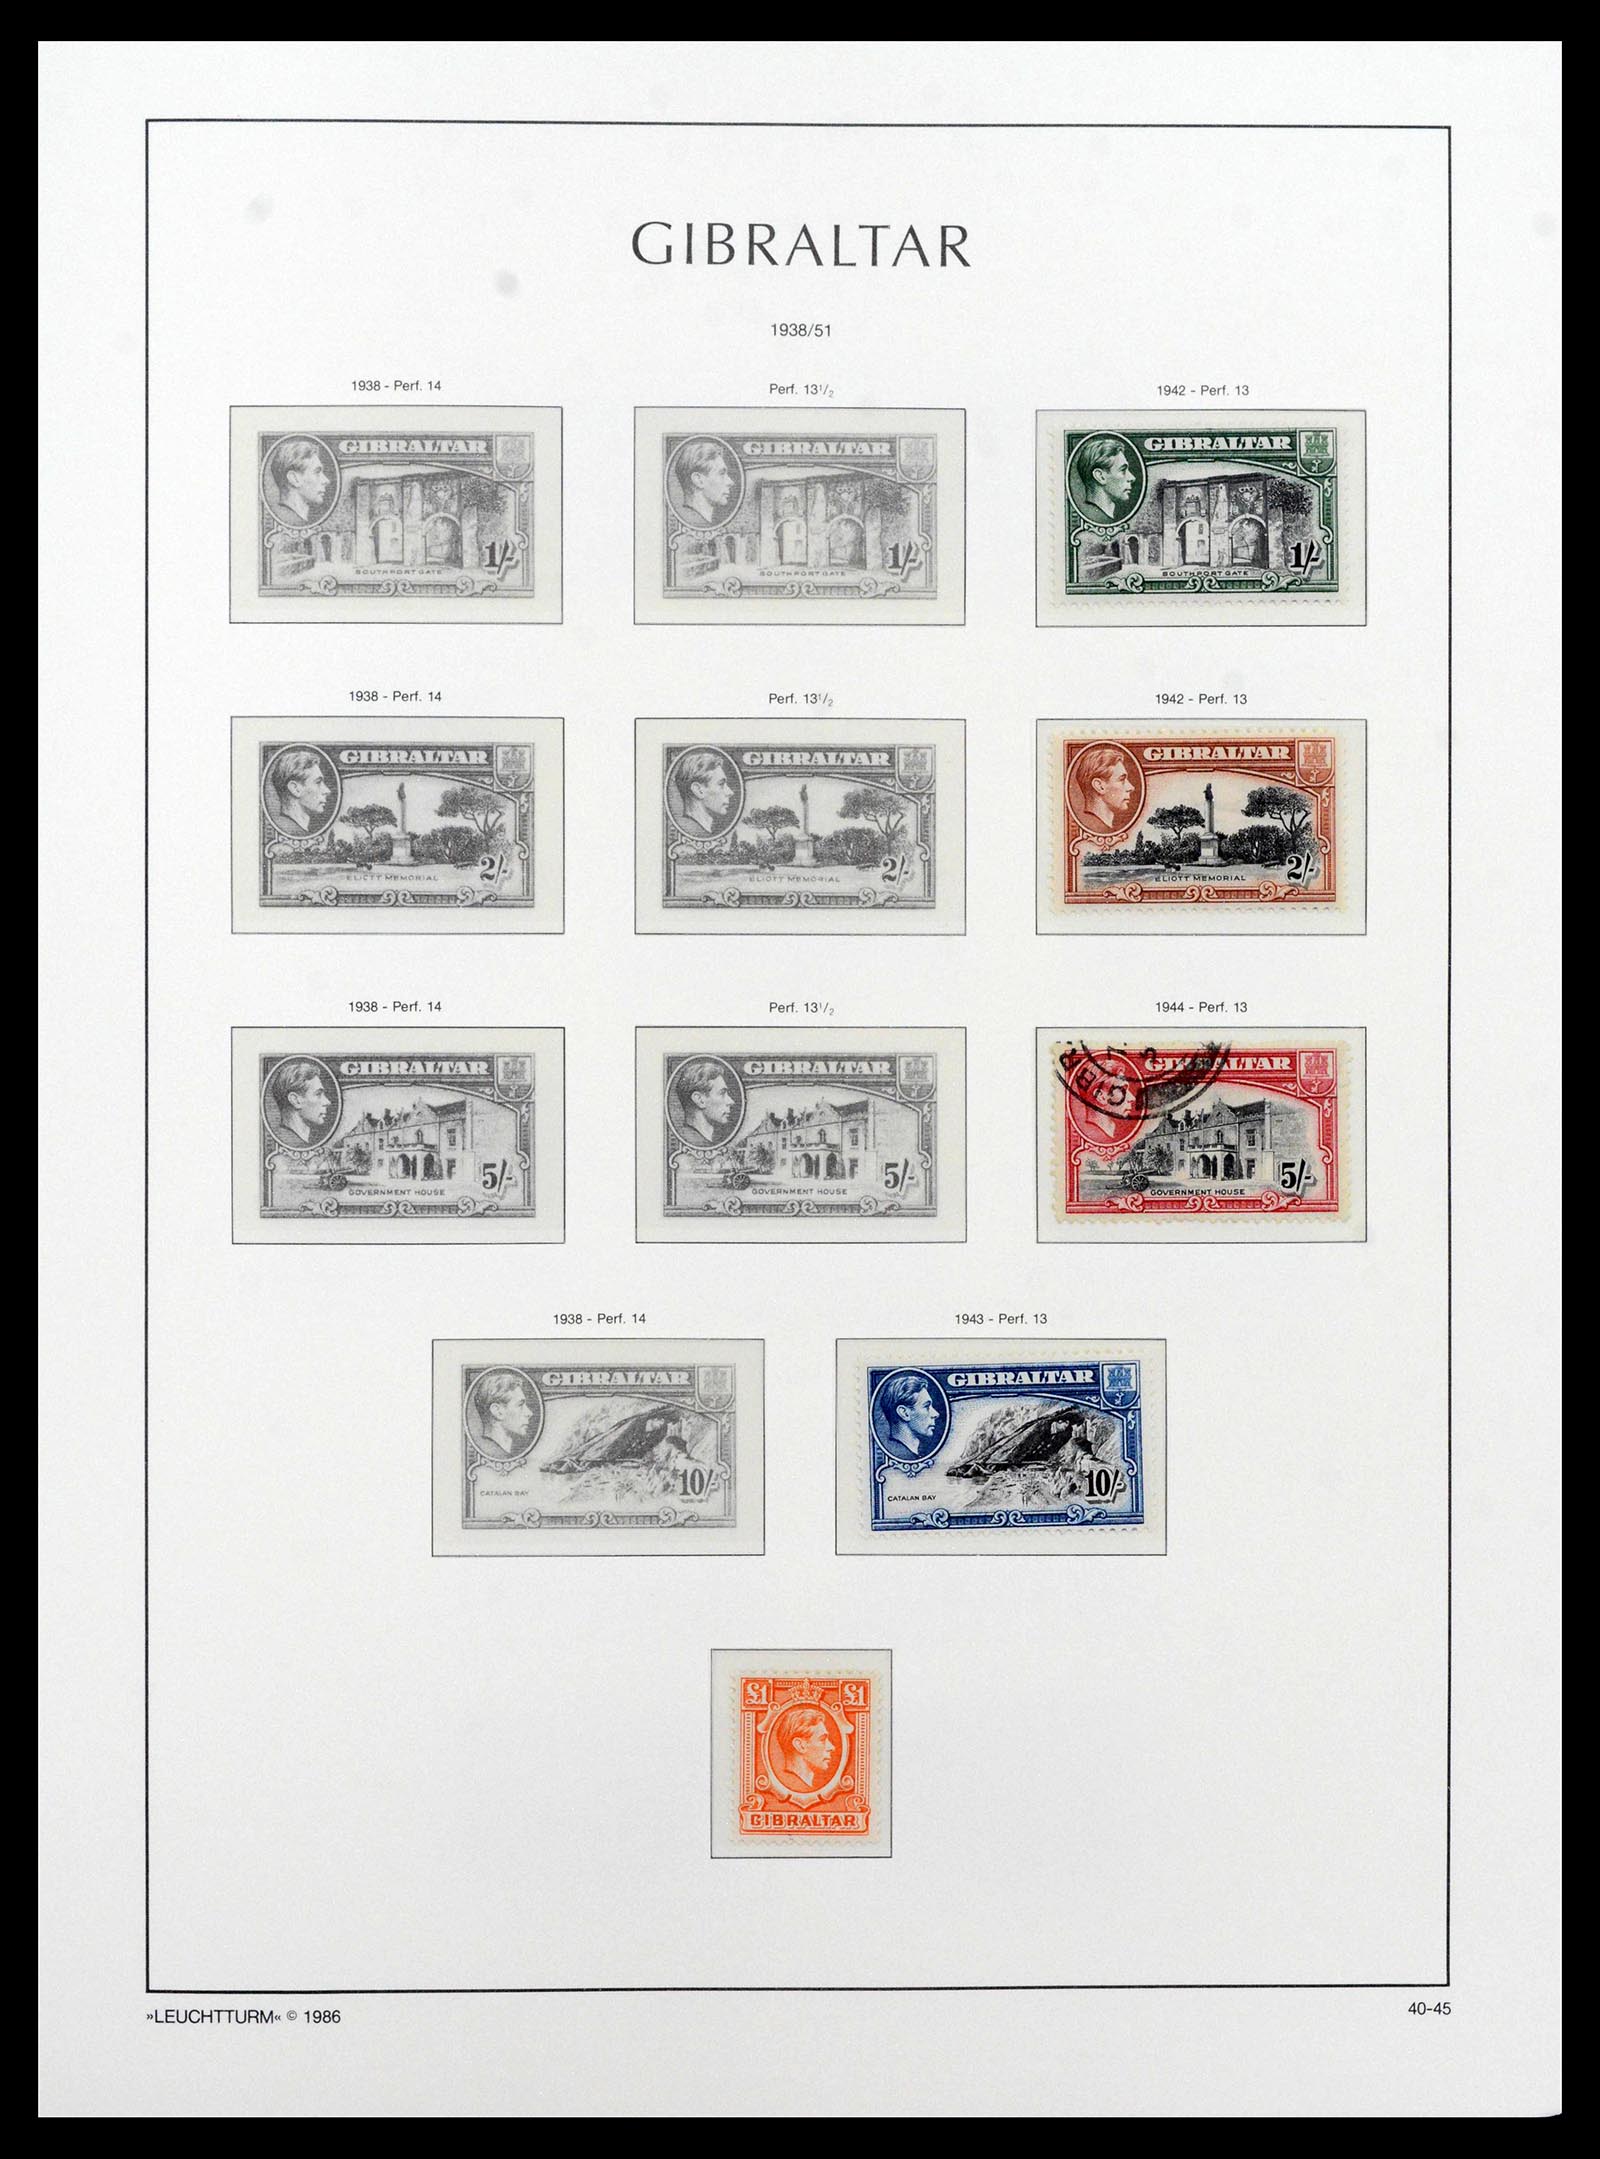 39158 0011 - Stamp collection 39158 Gibraltar 1886-2013.